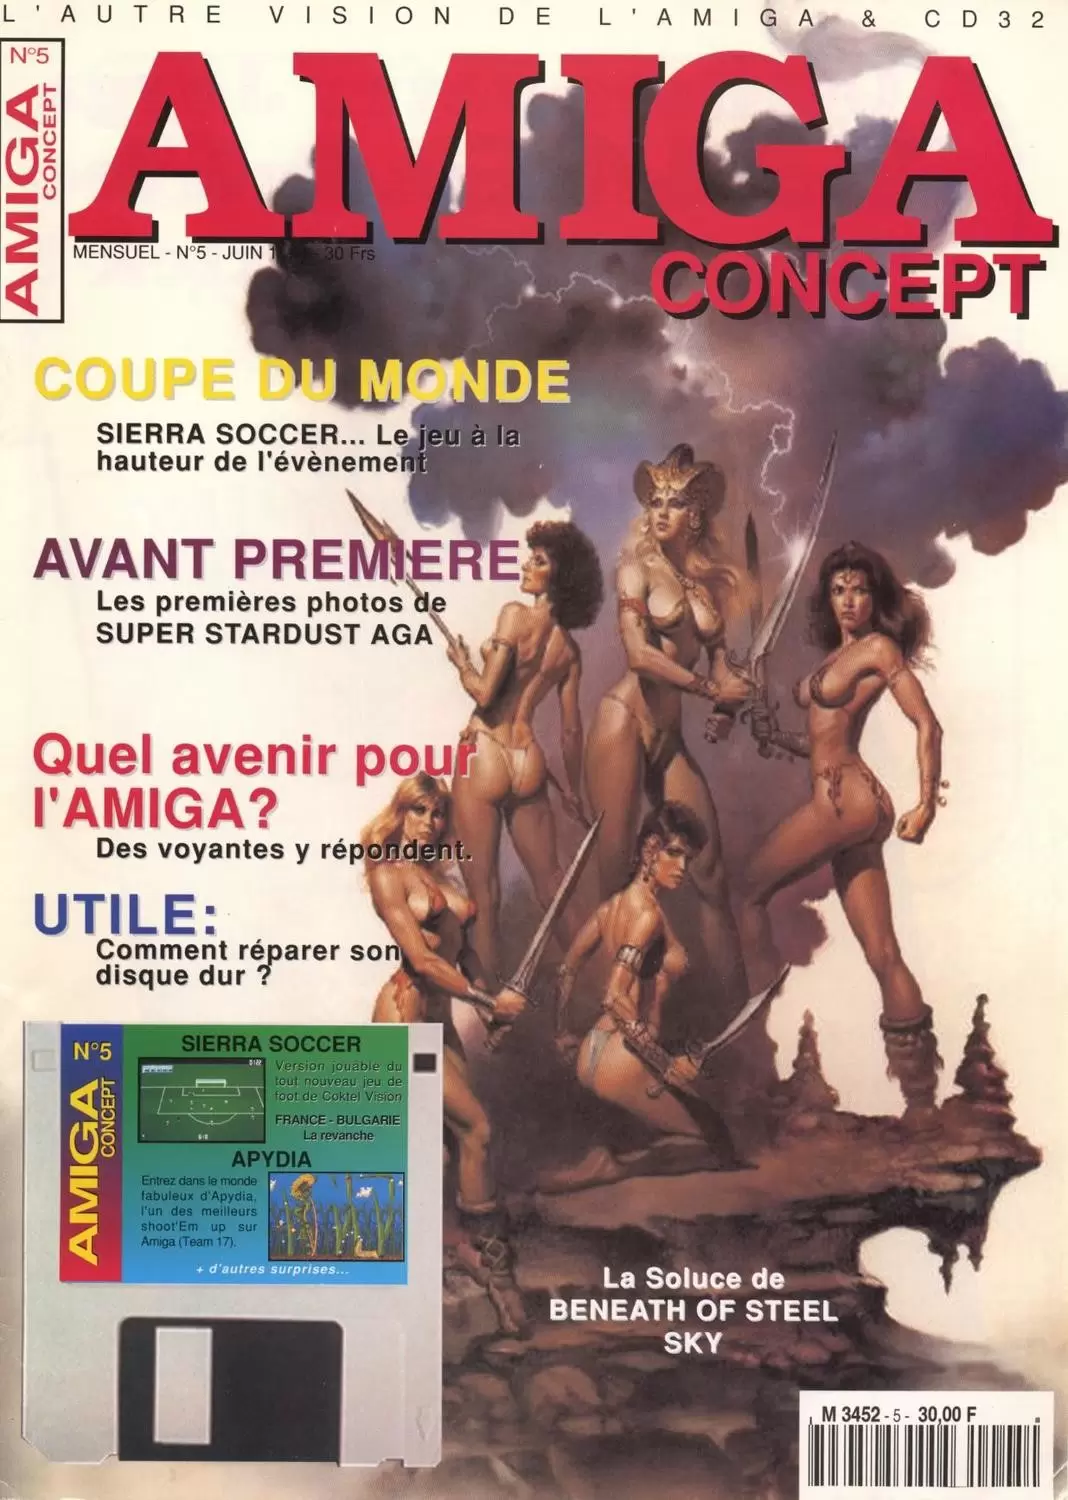 Amiga Concept - Amiga Concept n°5